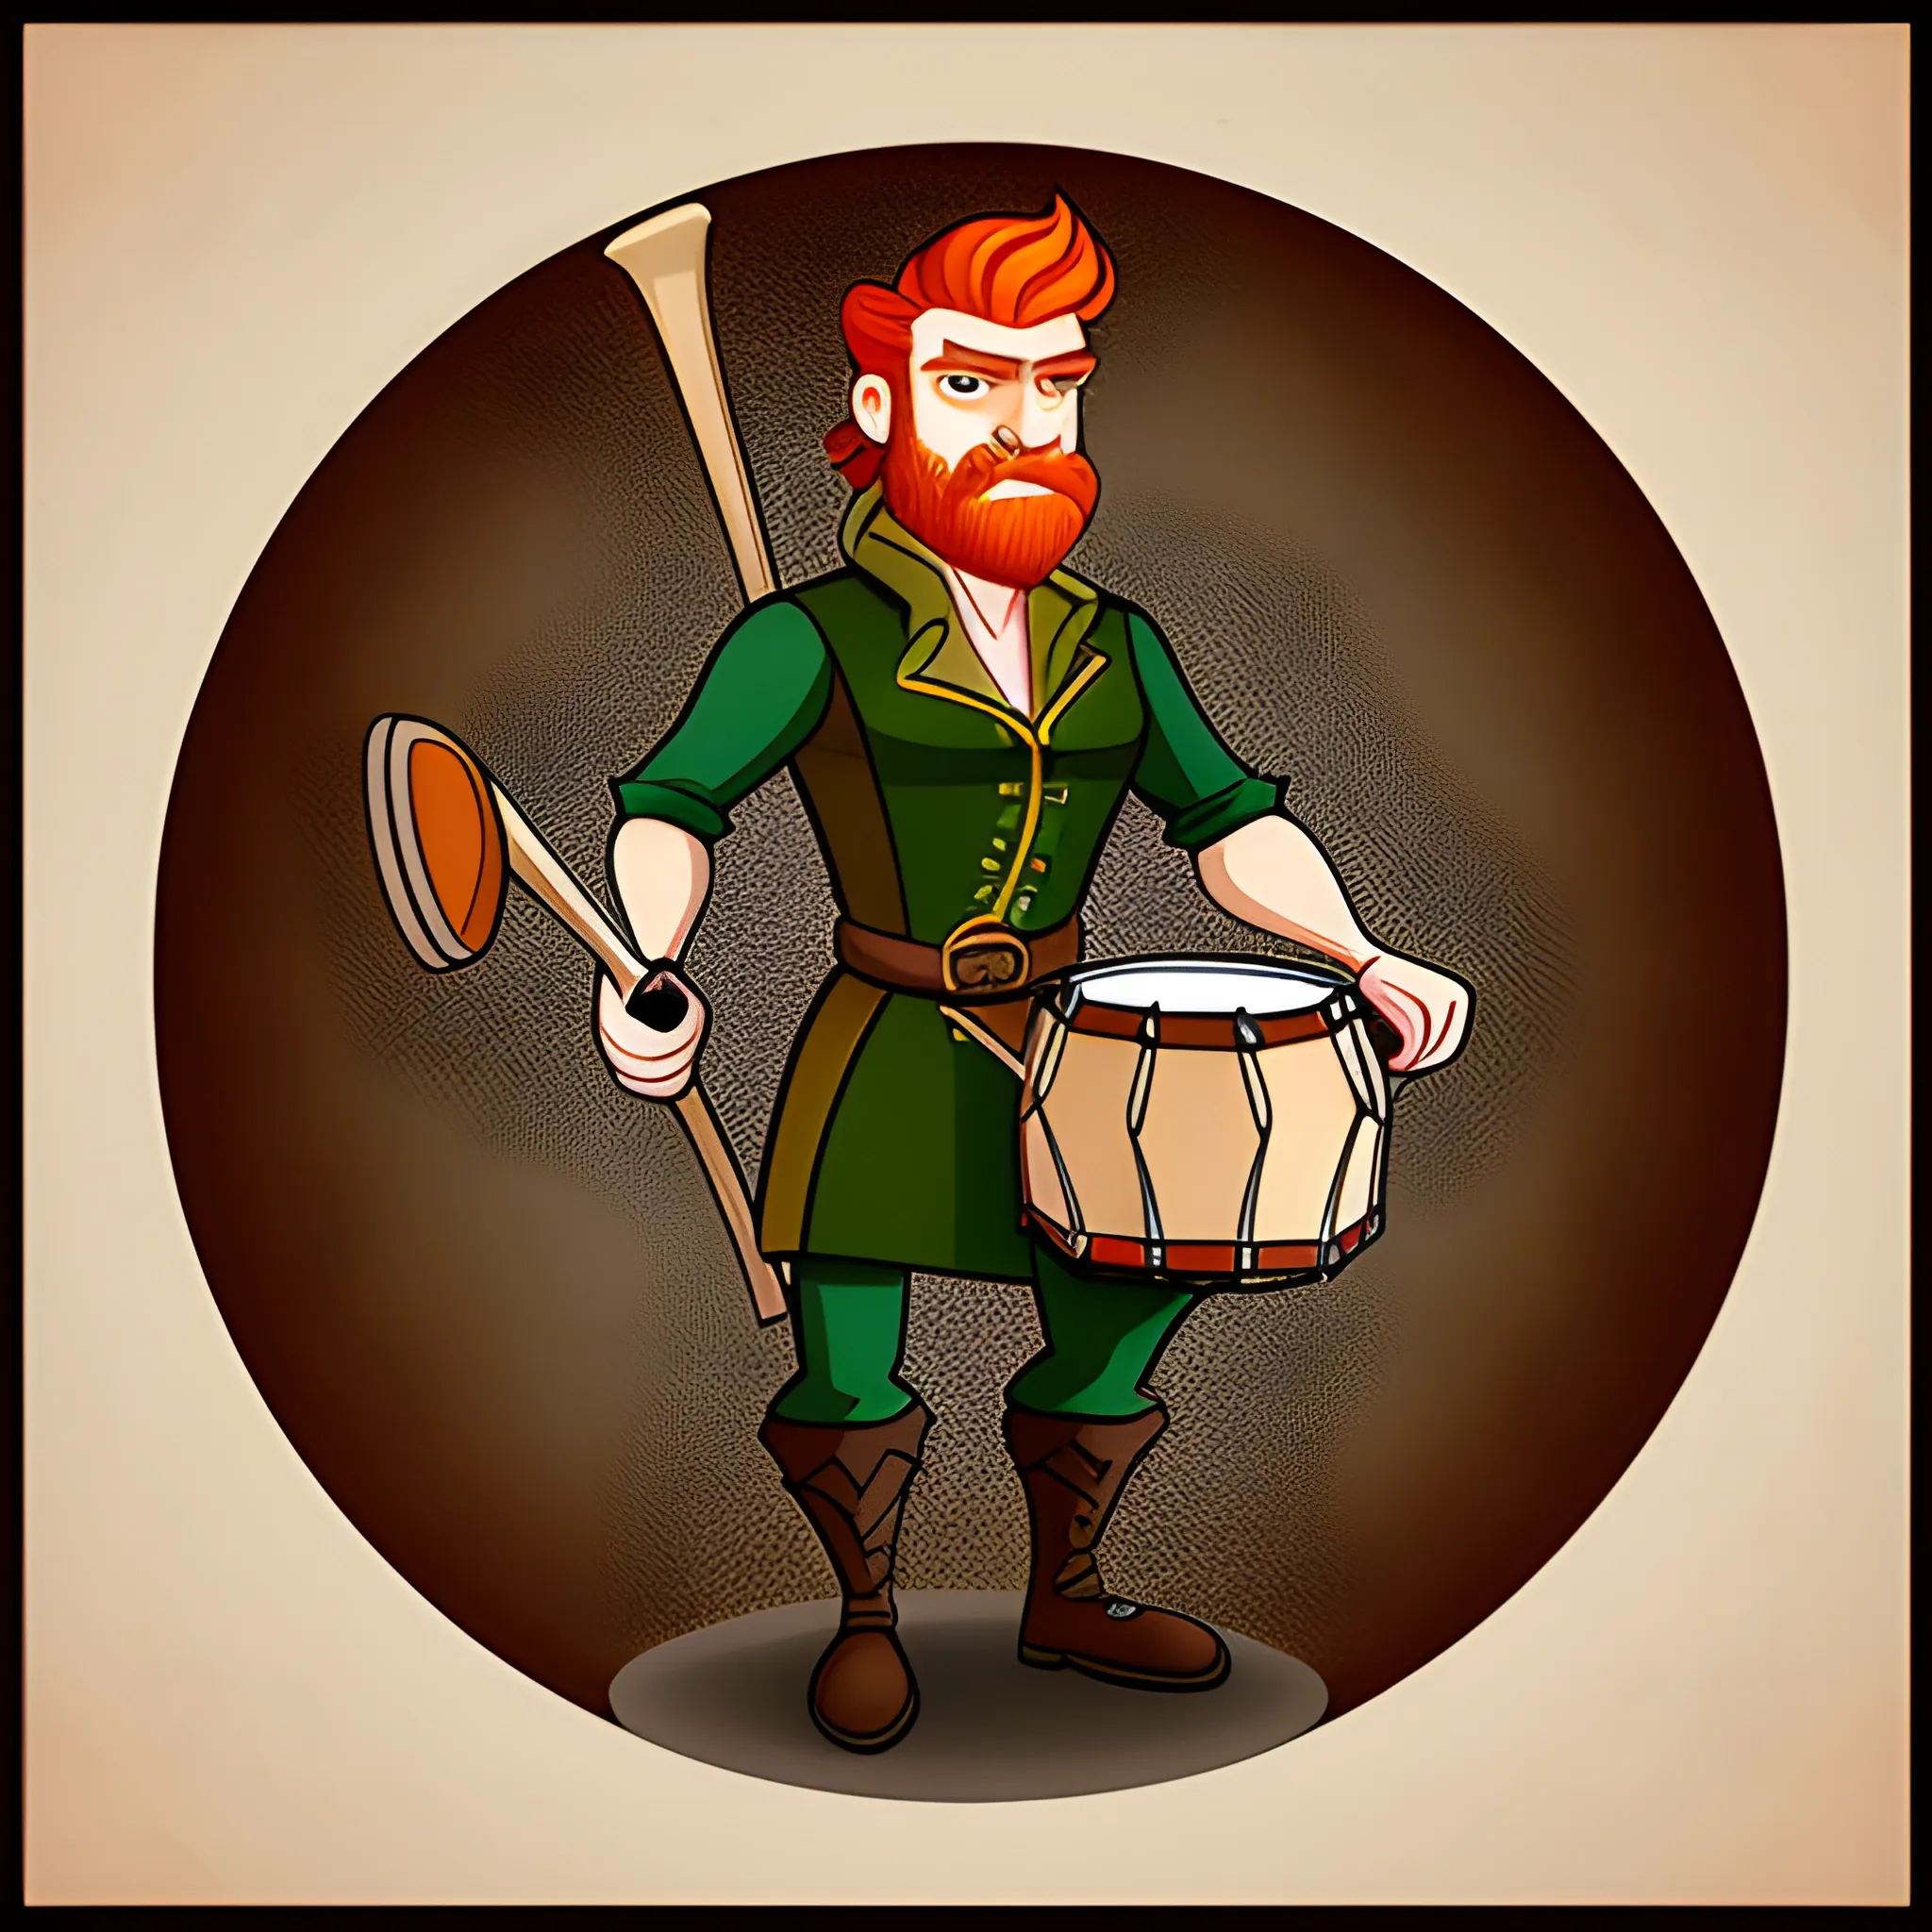 , Cartoon dnd hobbit ginger slim baby face man holding a drum